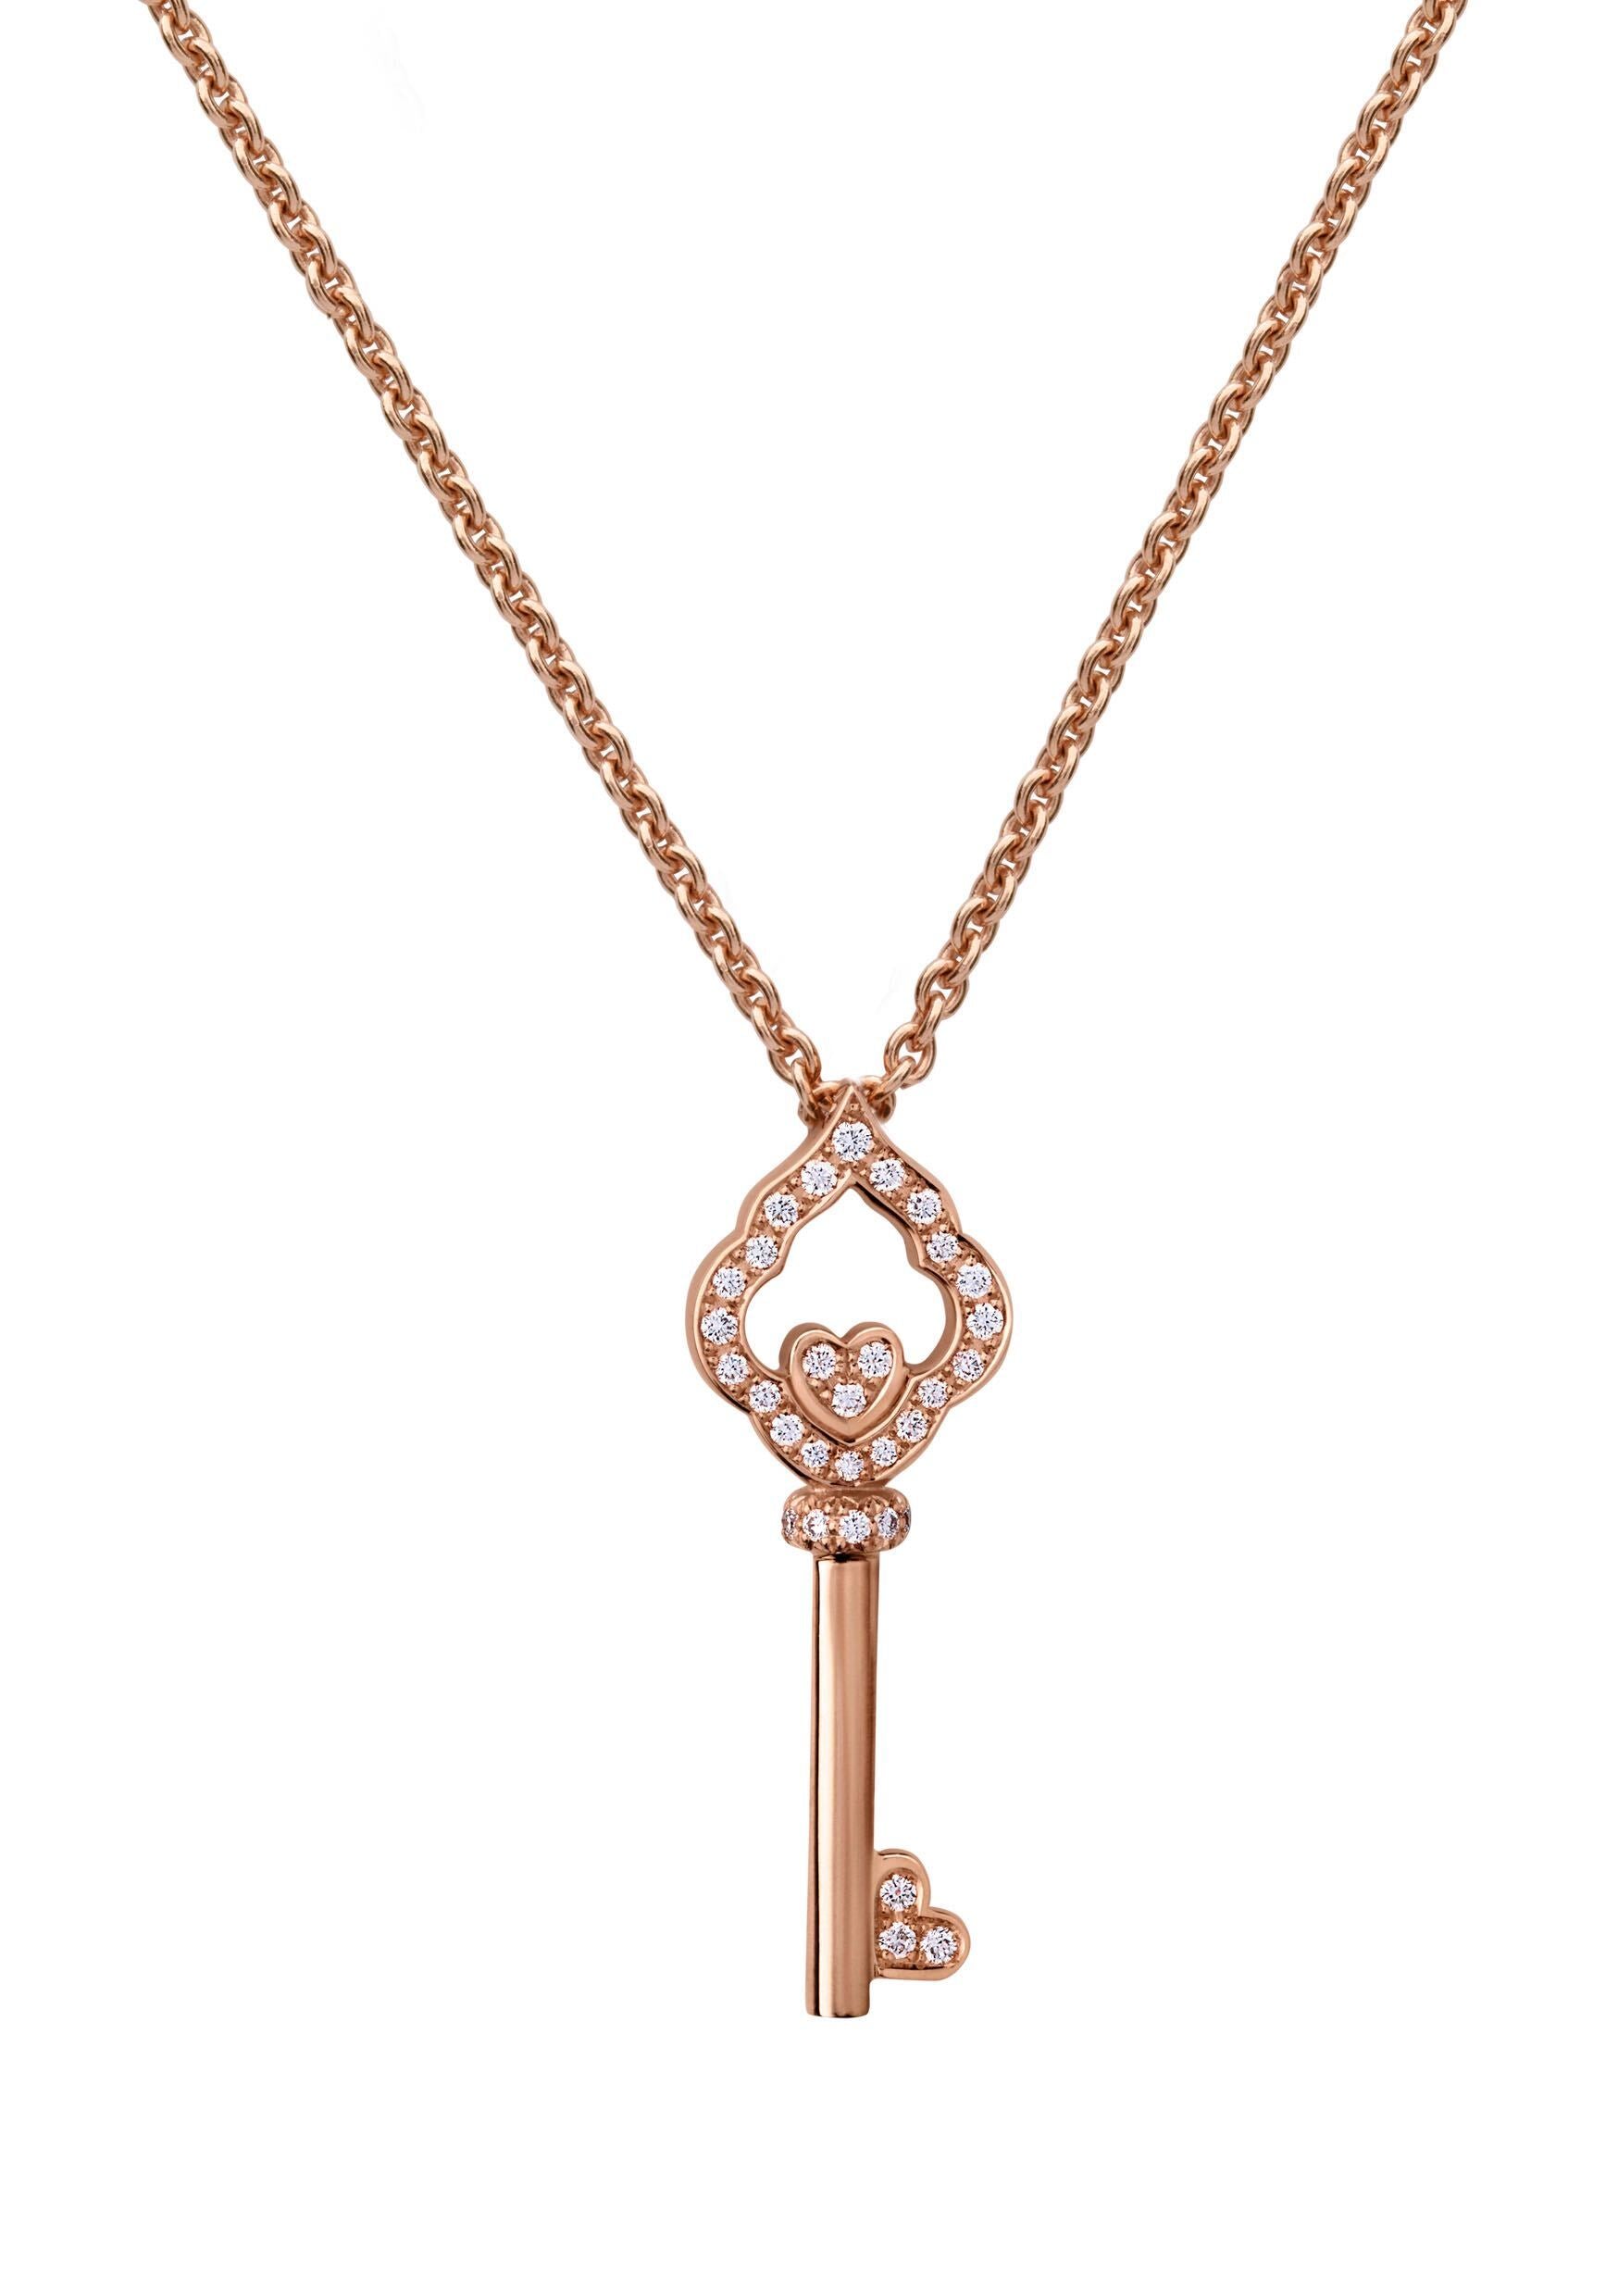 The Key Pendant Necklace